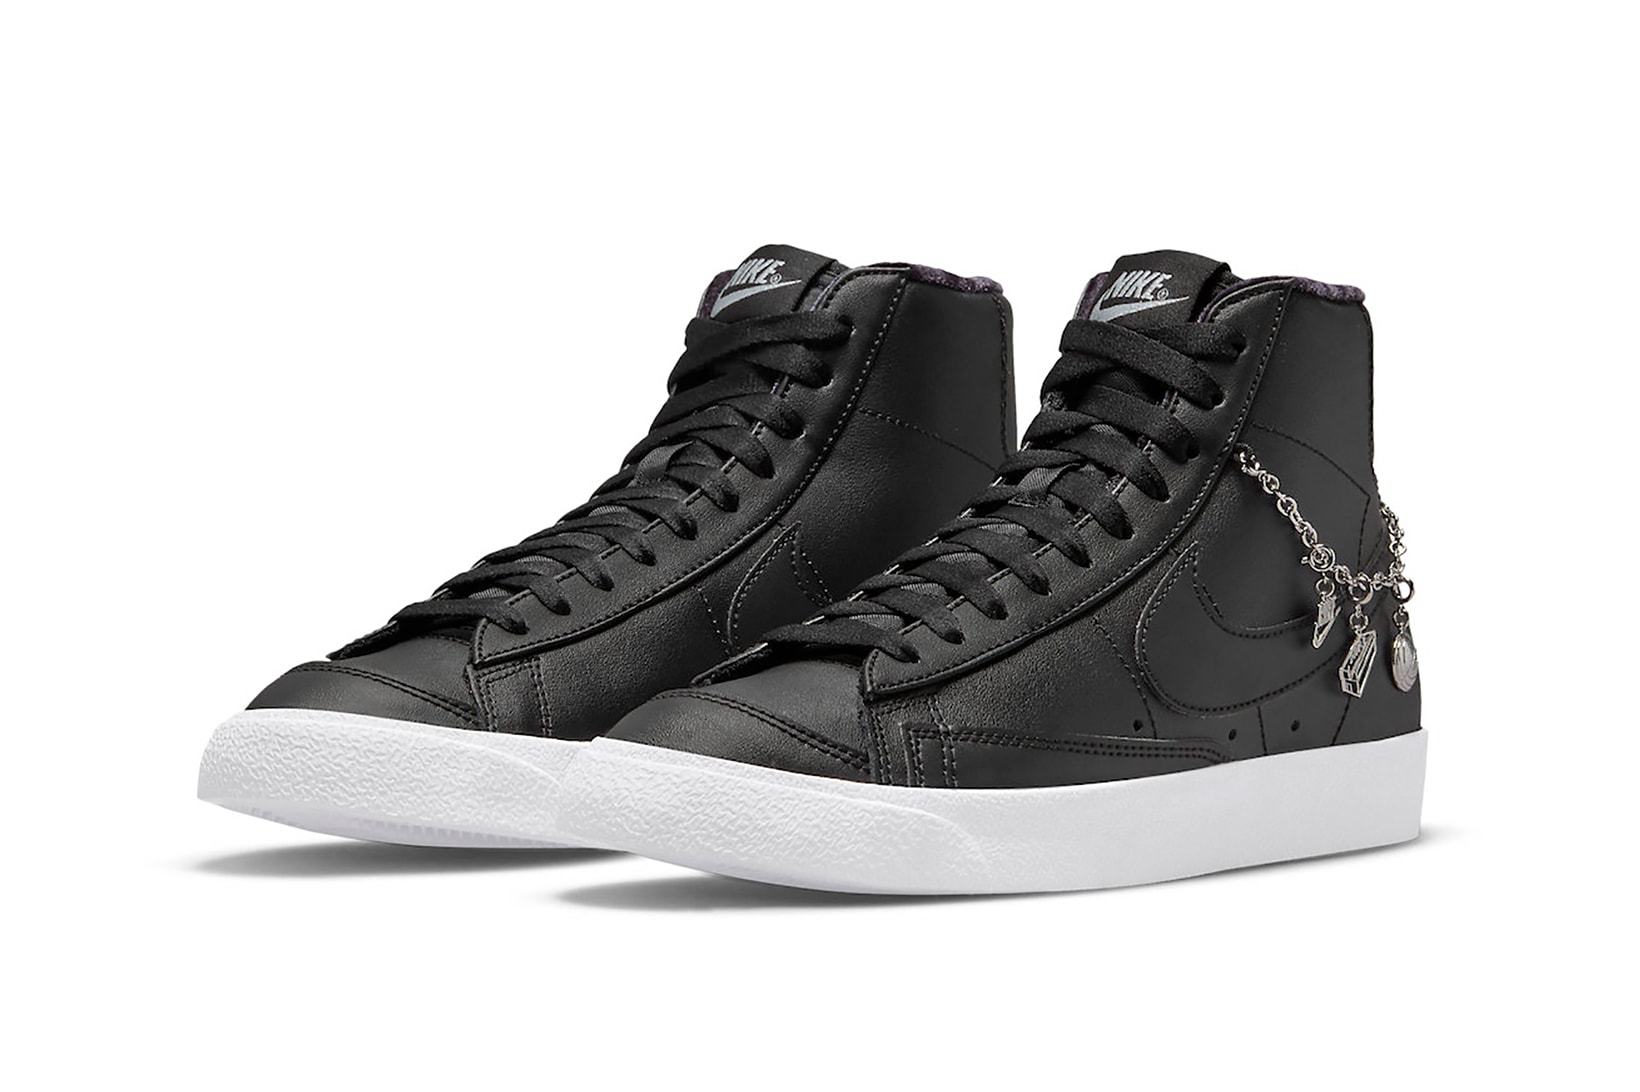 Nike Blazer Mid Lucky Charms Black Metallic Silver Sneakers Footwear Shoes Kicks Lateral